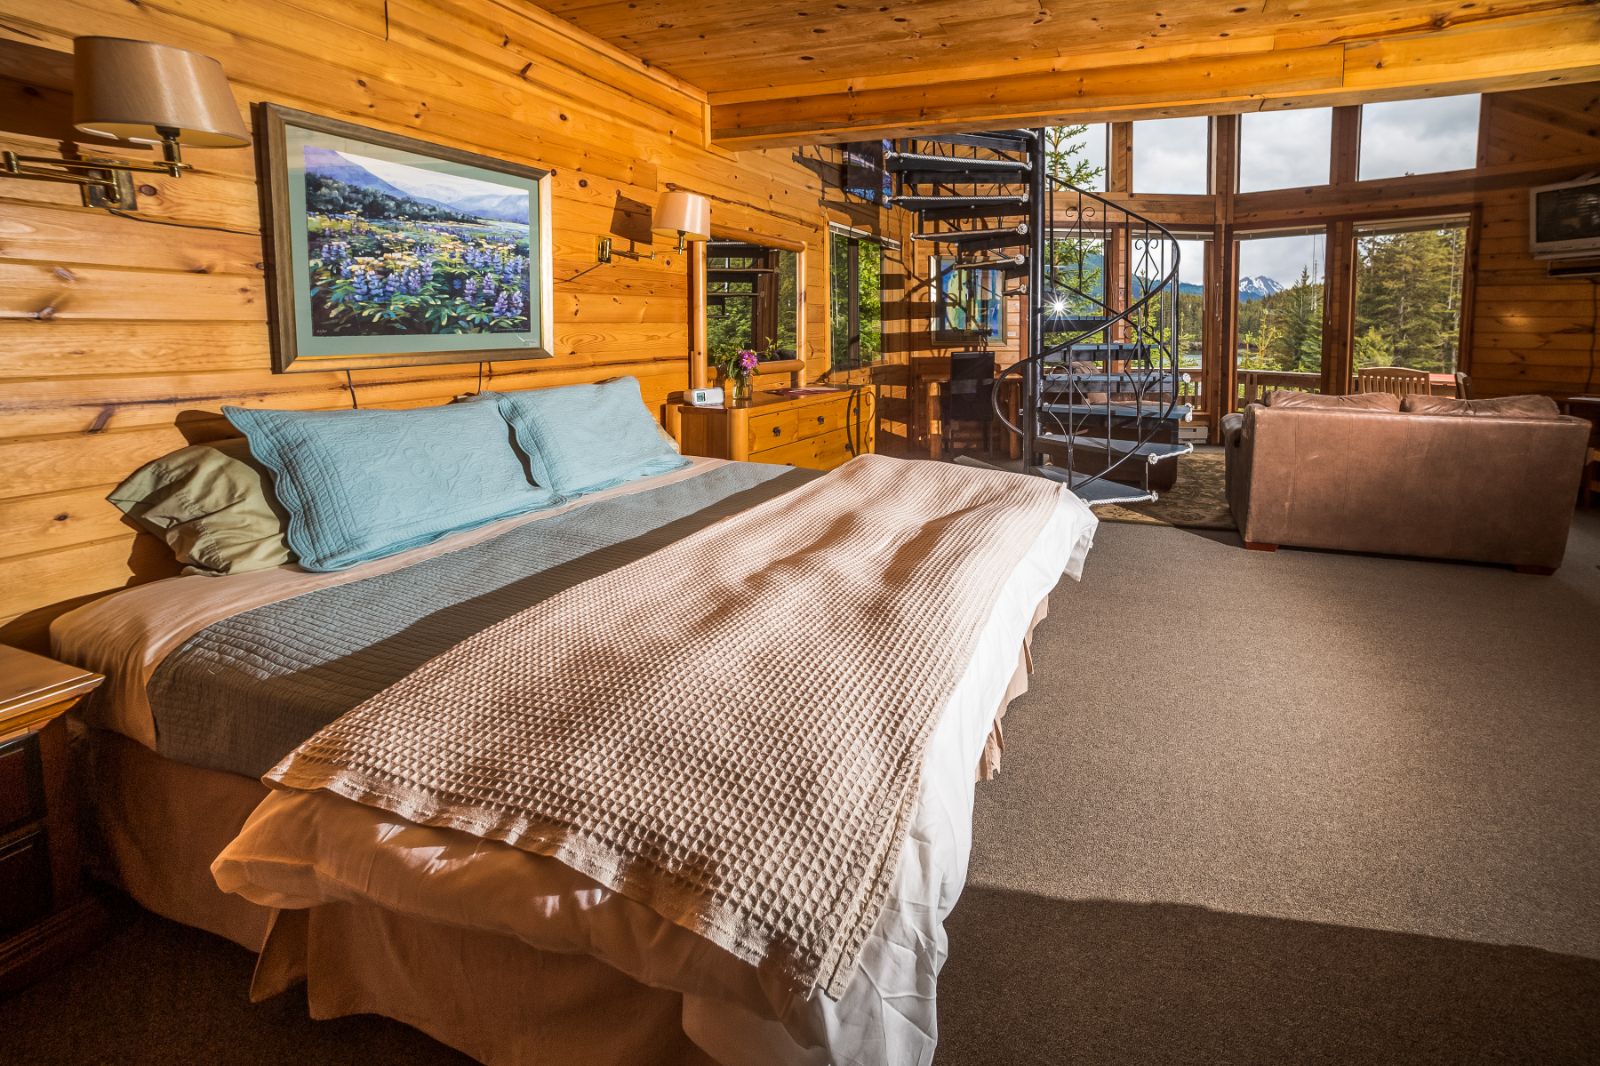 Kittiwake Cabin bed and window view at Tutka Bay Lodge in Alaska, USA